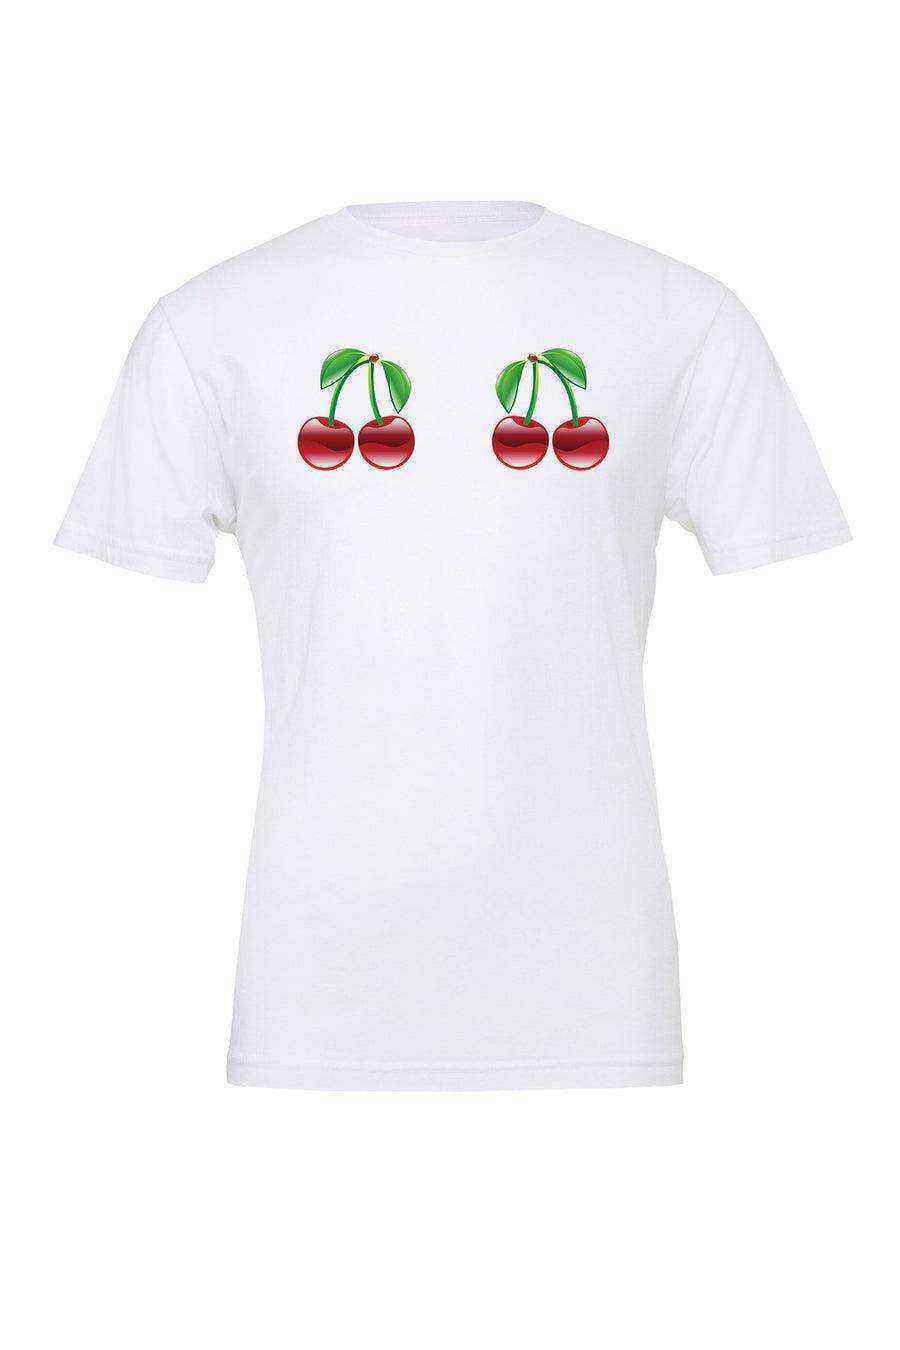 Cherries Shirt | Cherry Shirt - Dylan's Tees